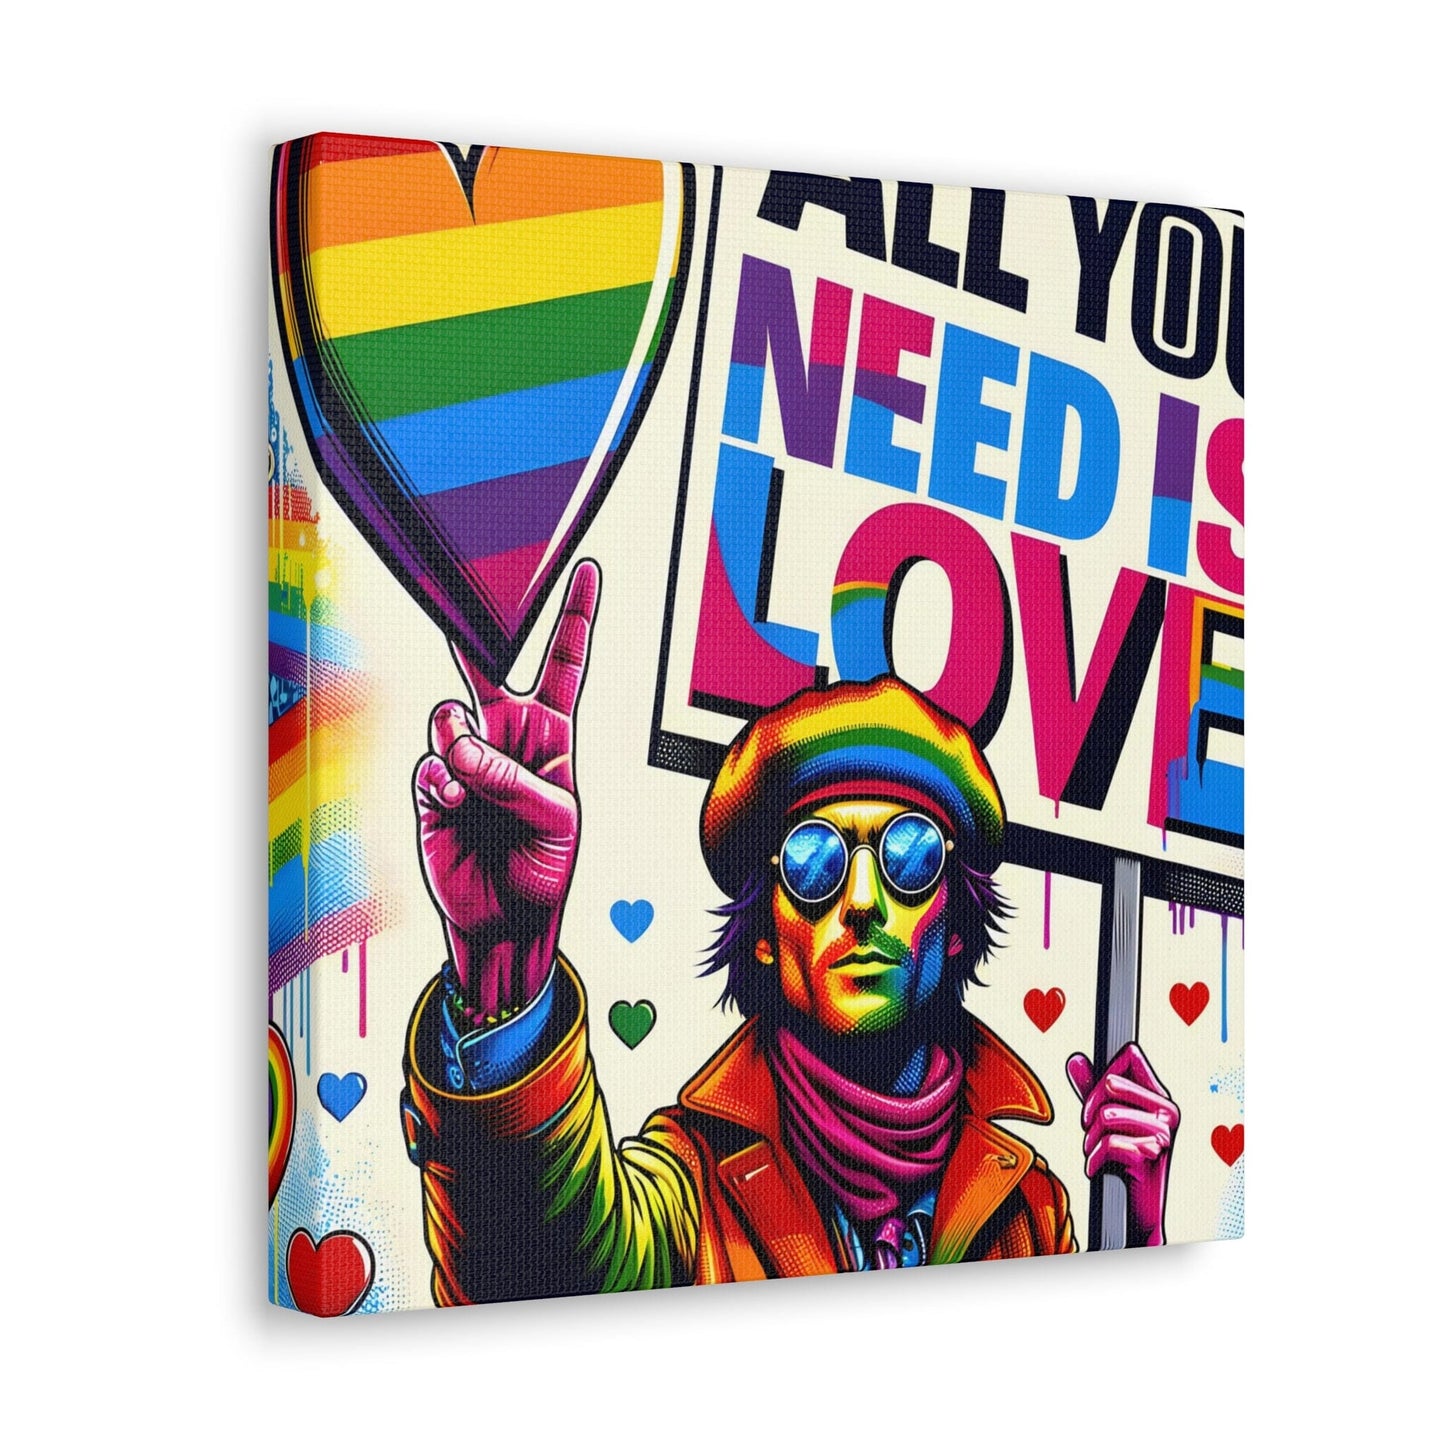 Julian Ardley . Rainbow Revolution. Exclusive Graphic Canvas Print.